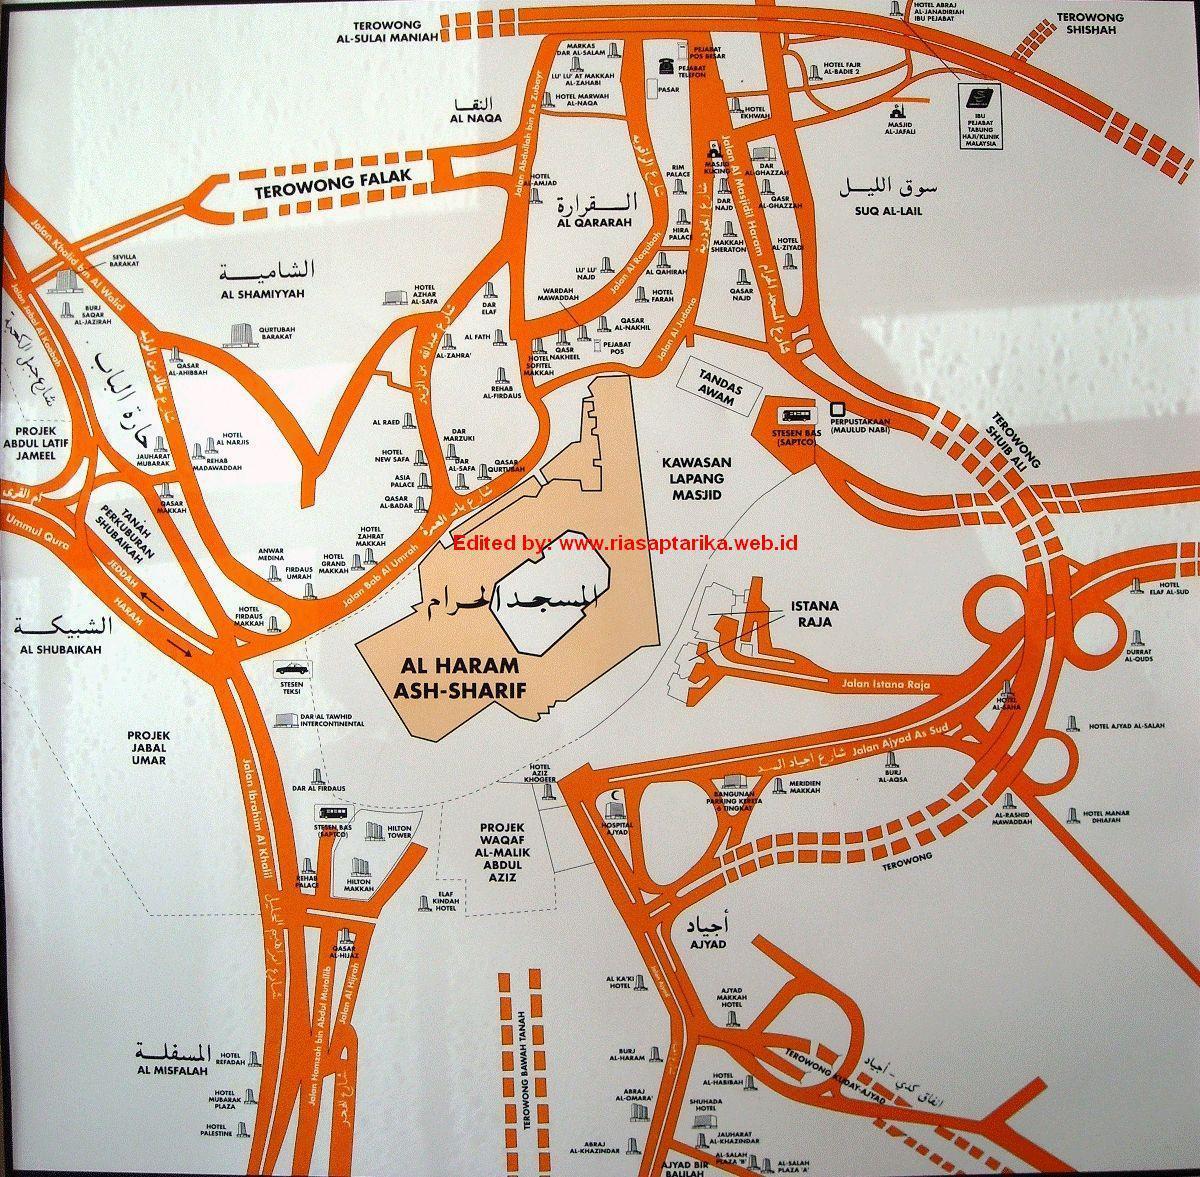 kort over misfalah Makkah kort